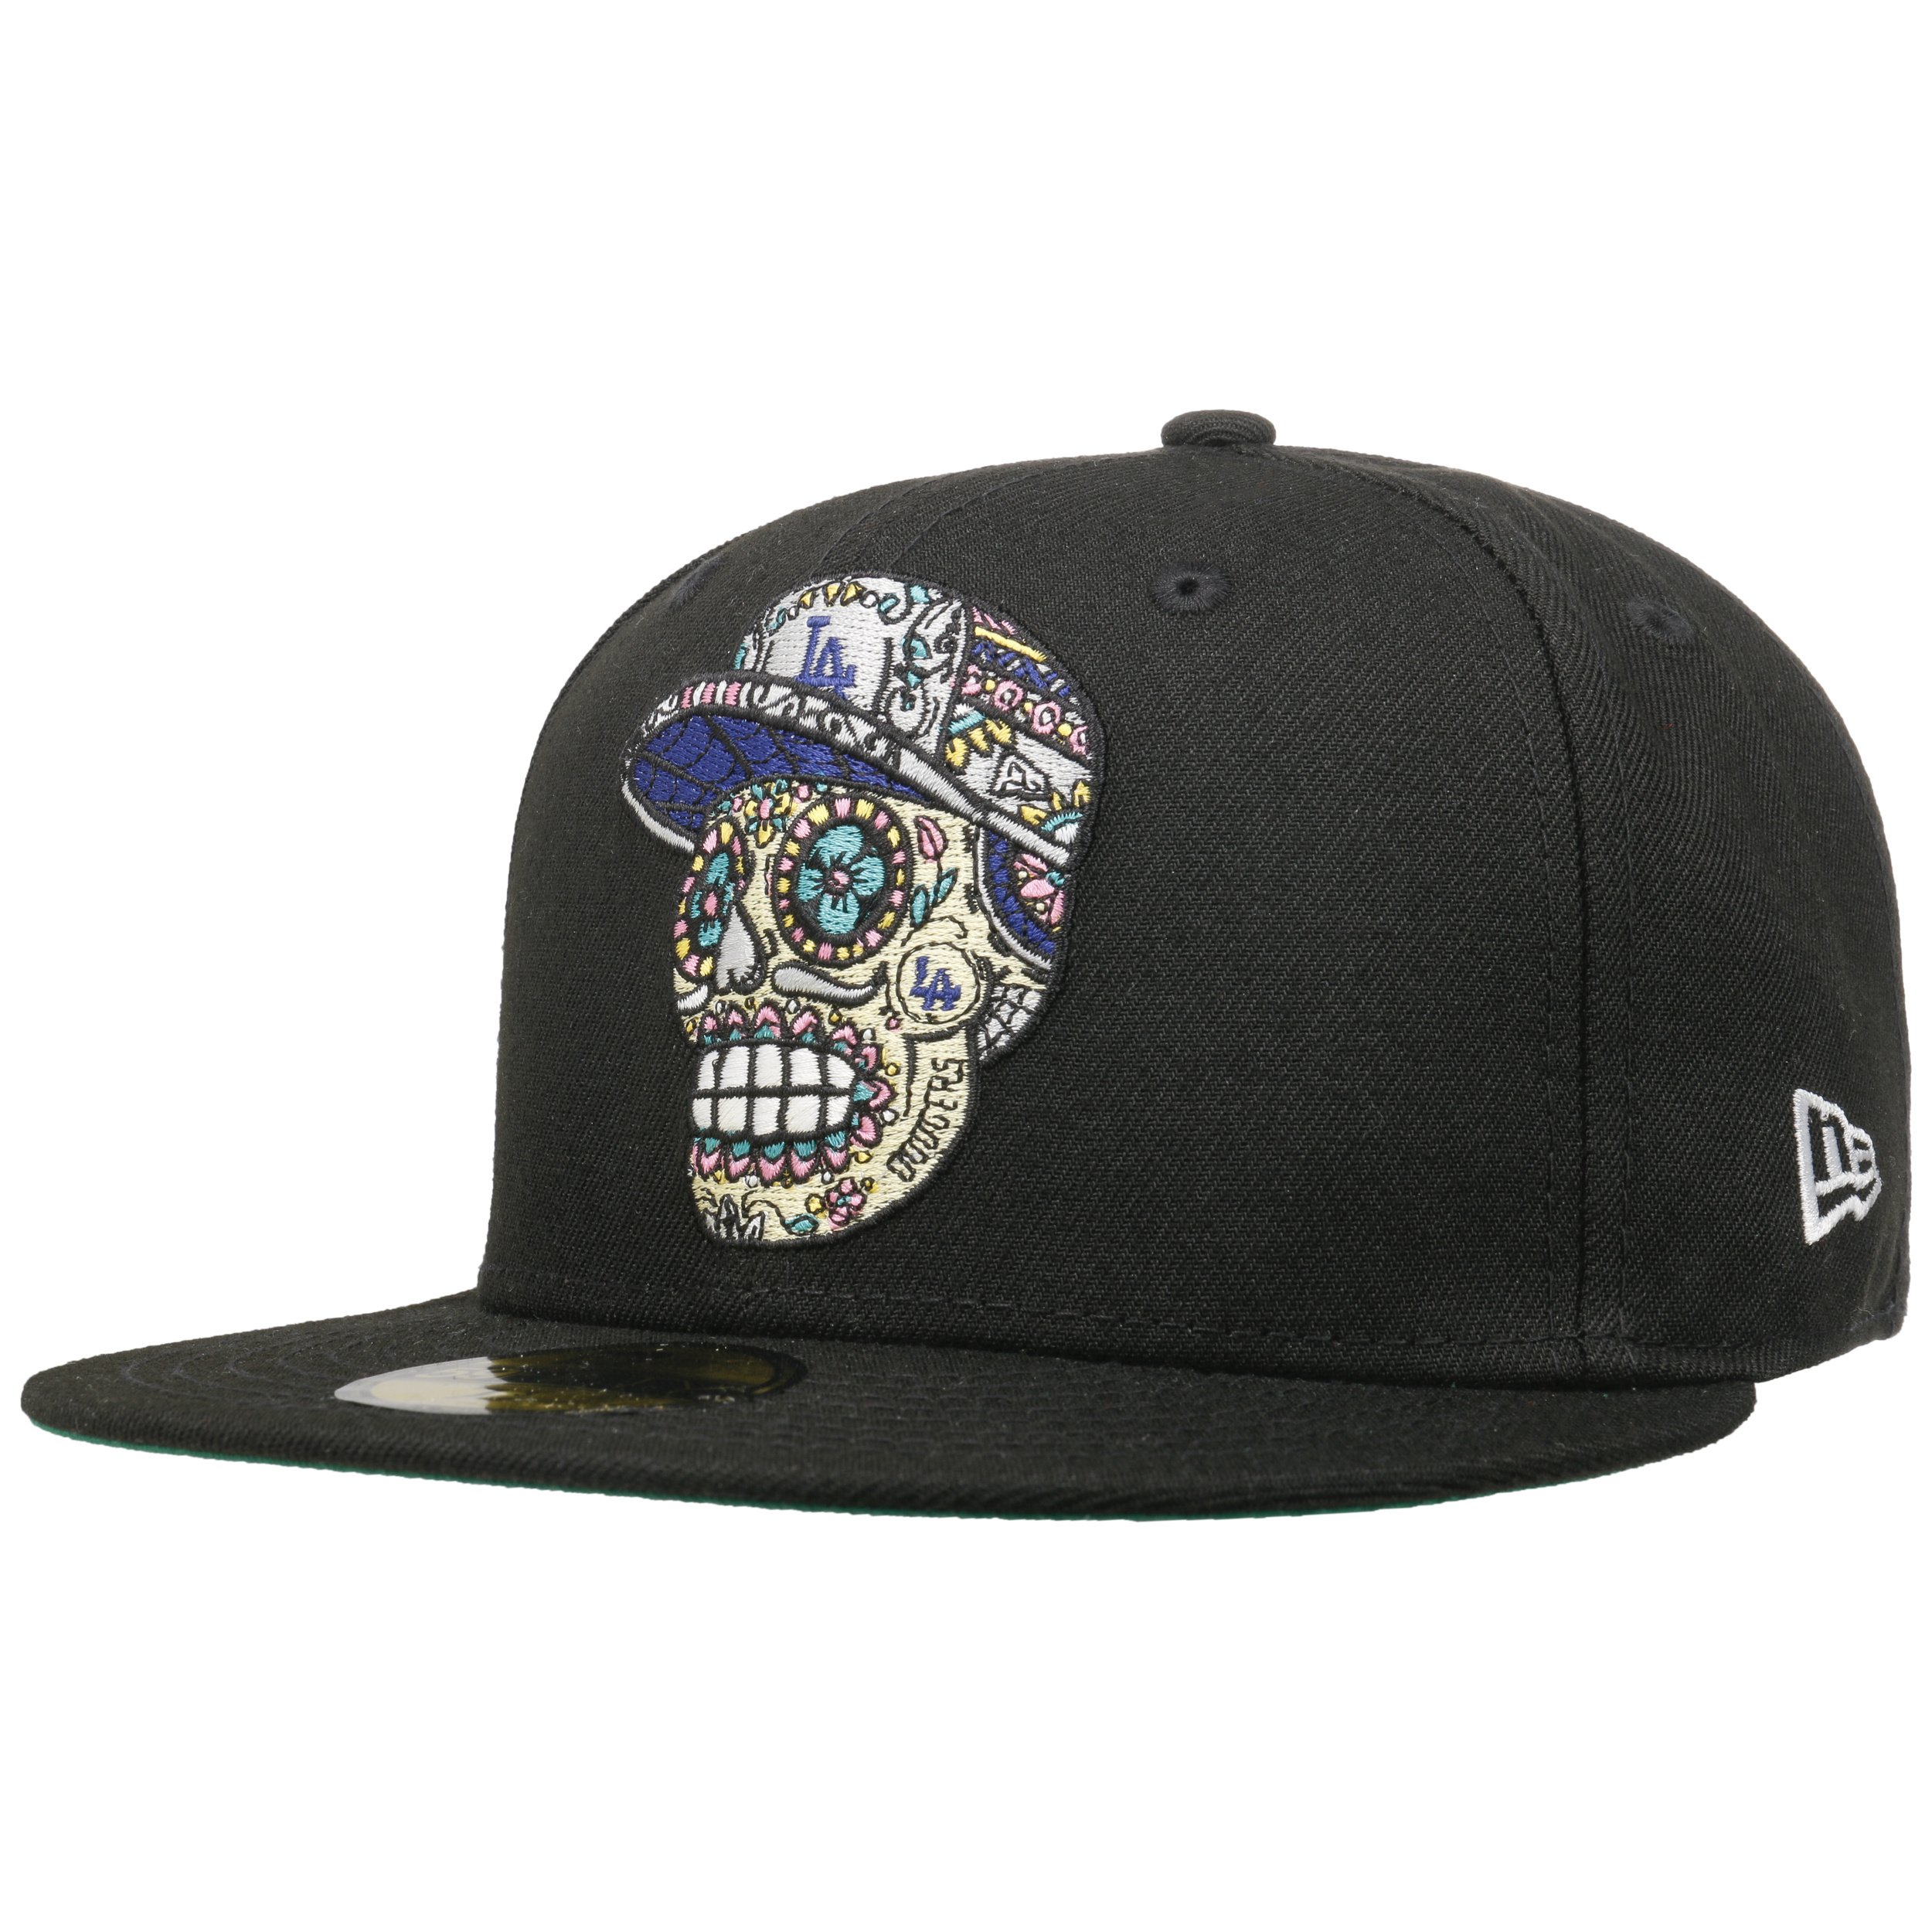 59Fifty Dodgers Skull Cap by New Era - 35,95 £